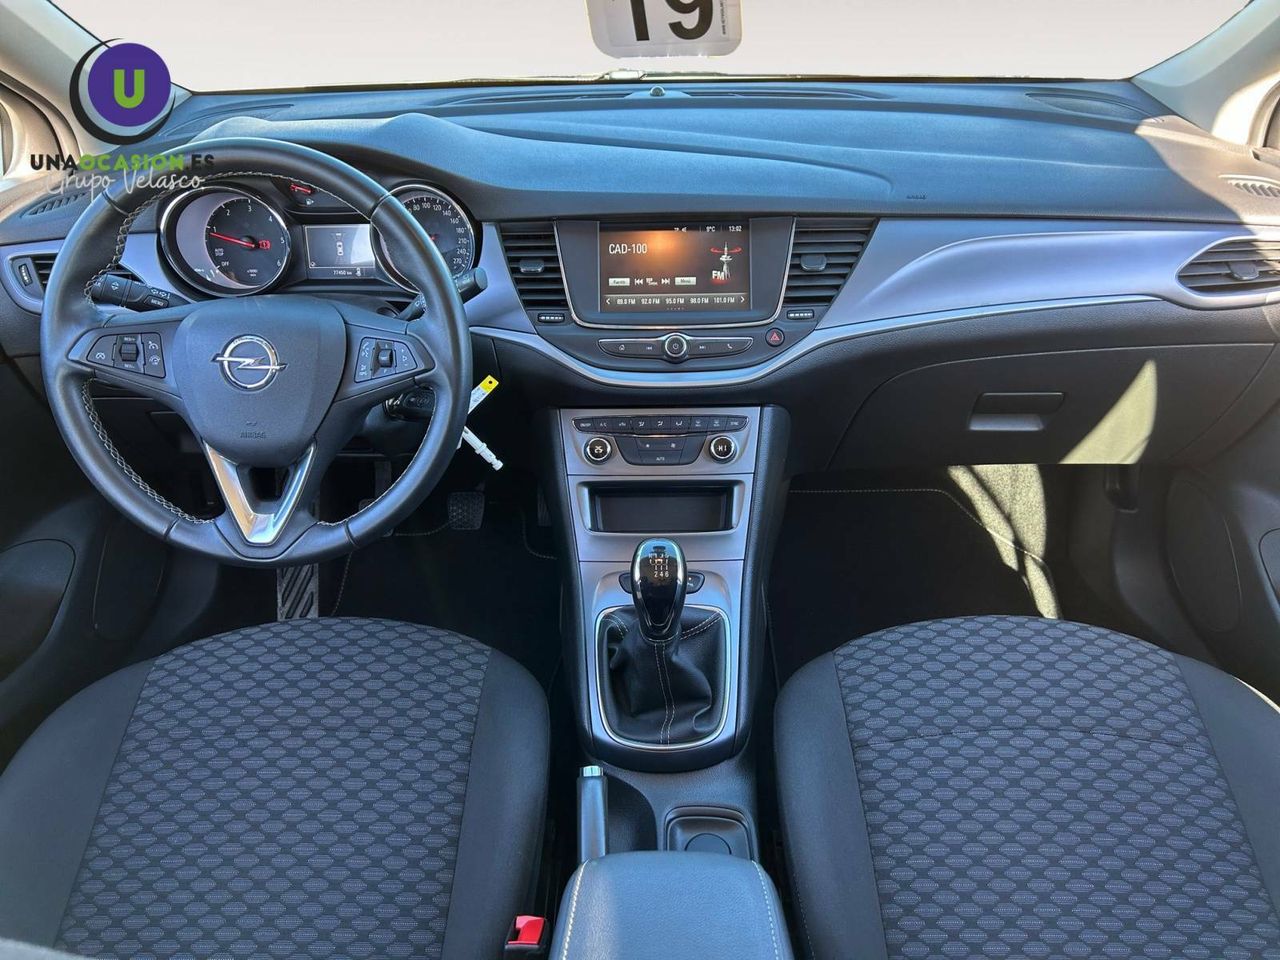 Foto Opel Astra 10